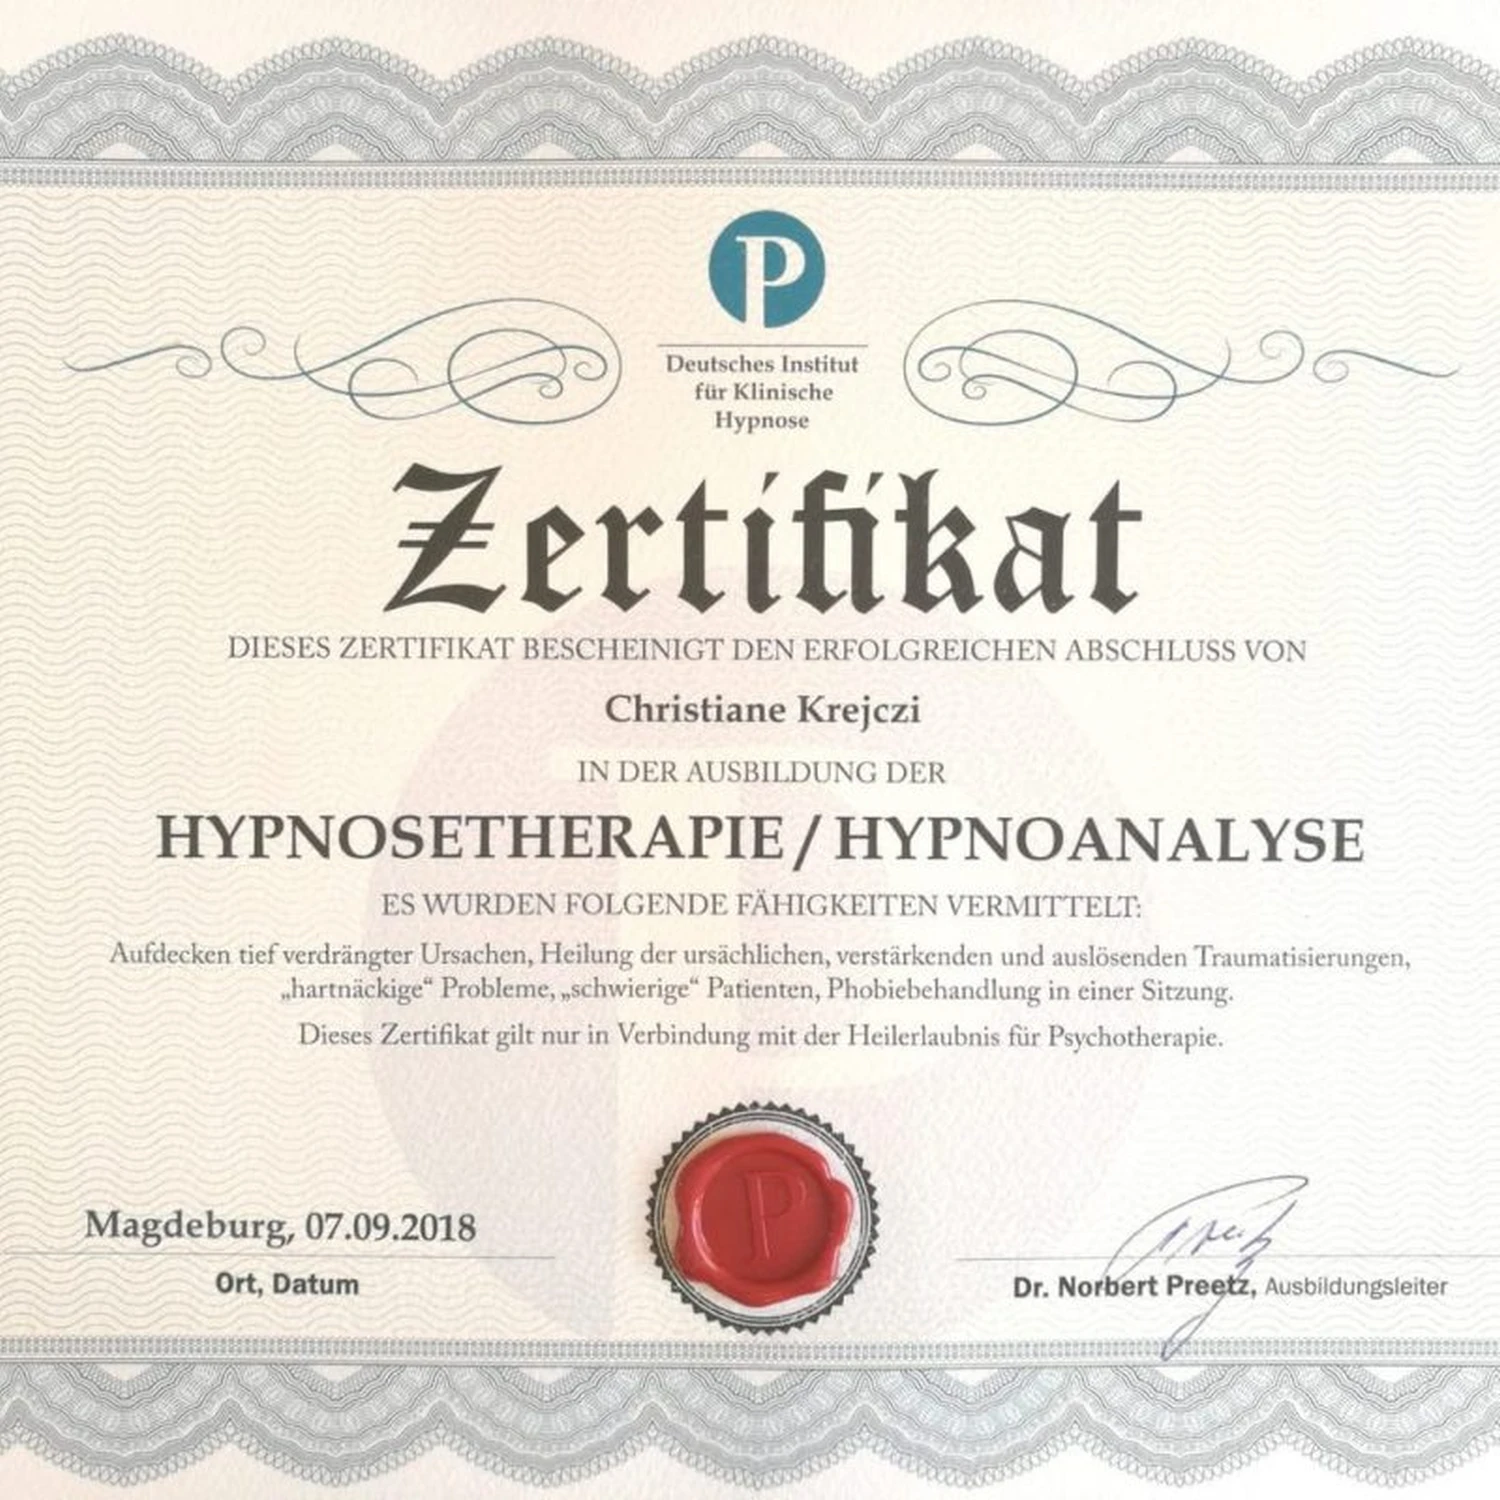 Klinische Hypnose München - Christiane Krejczi, Zertifikat